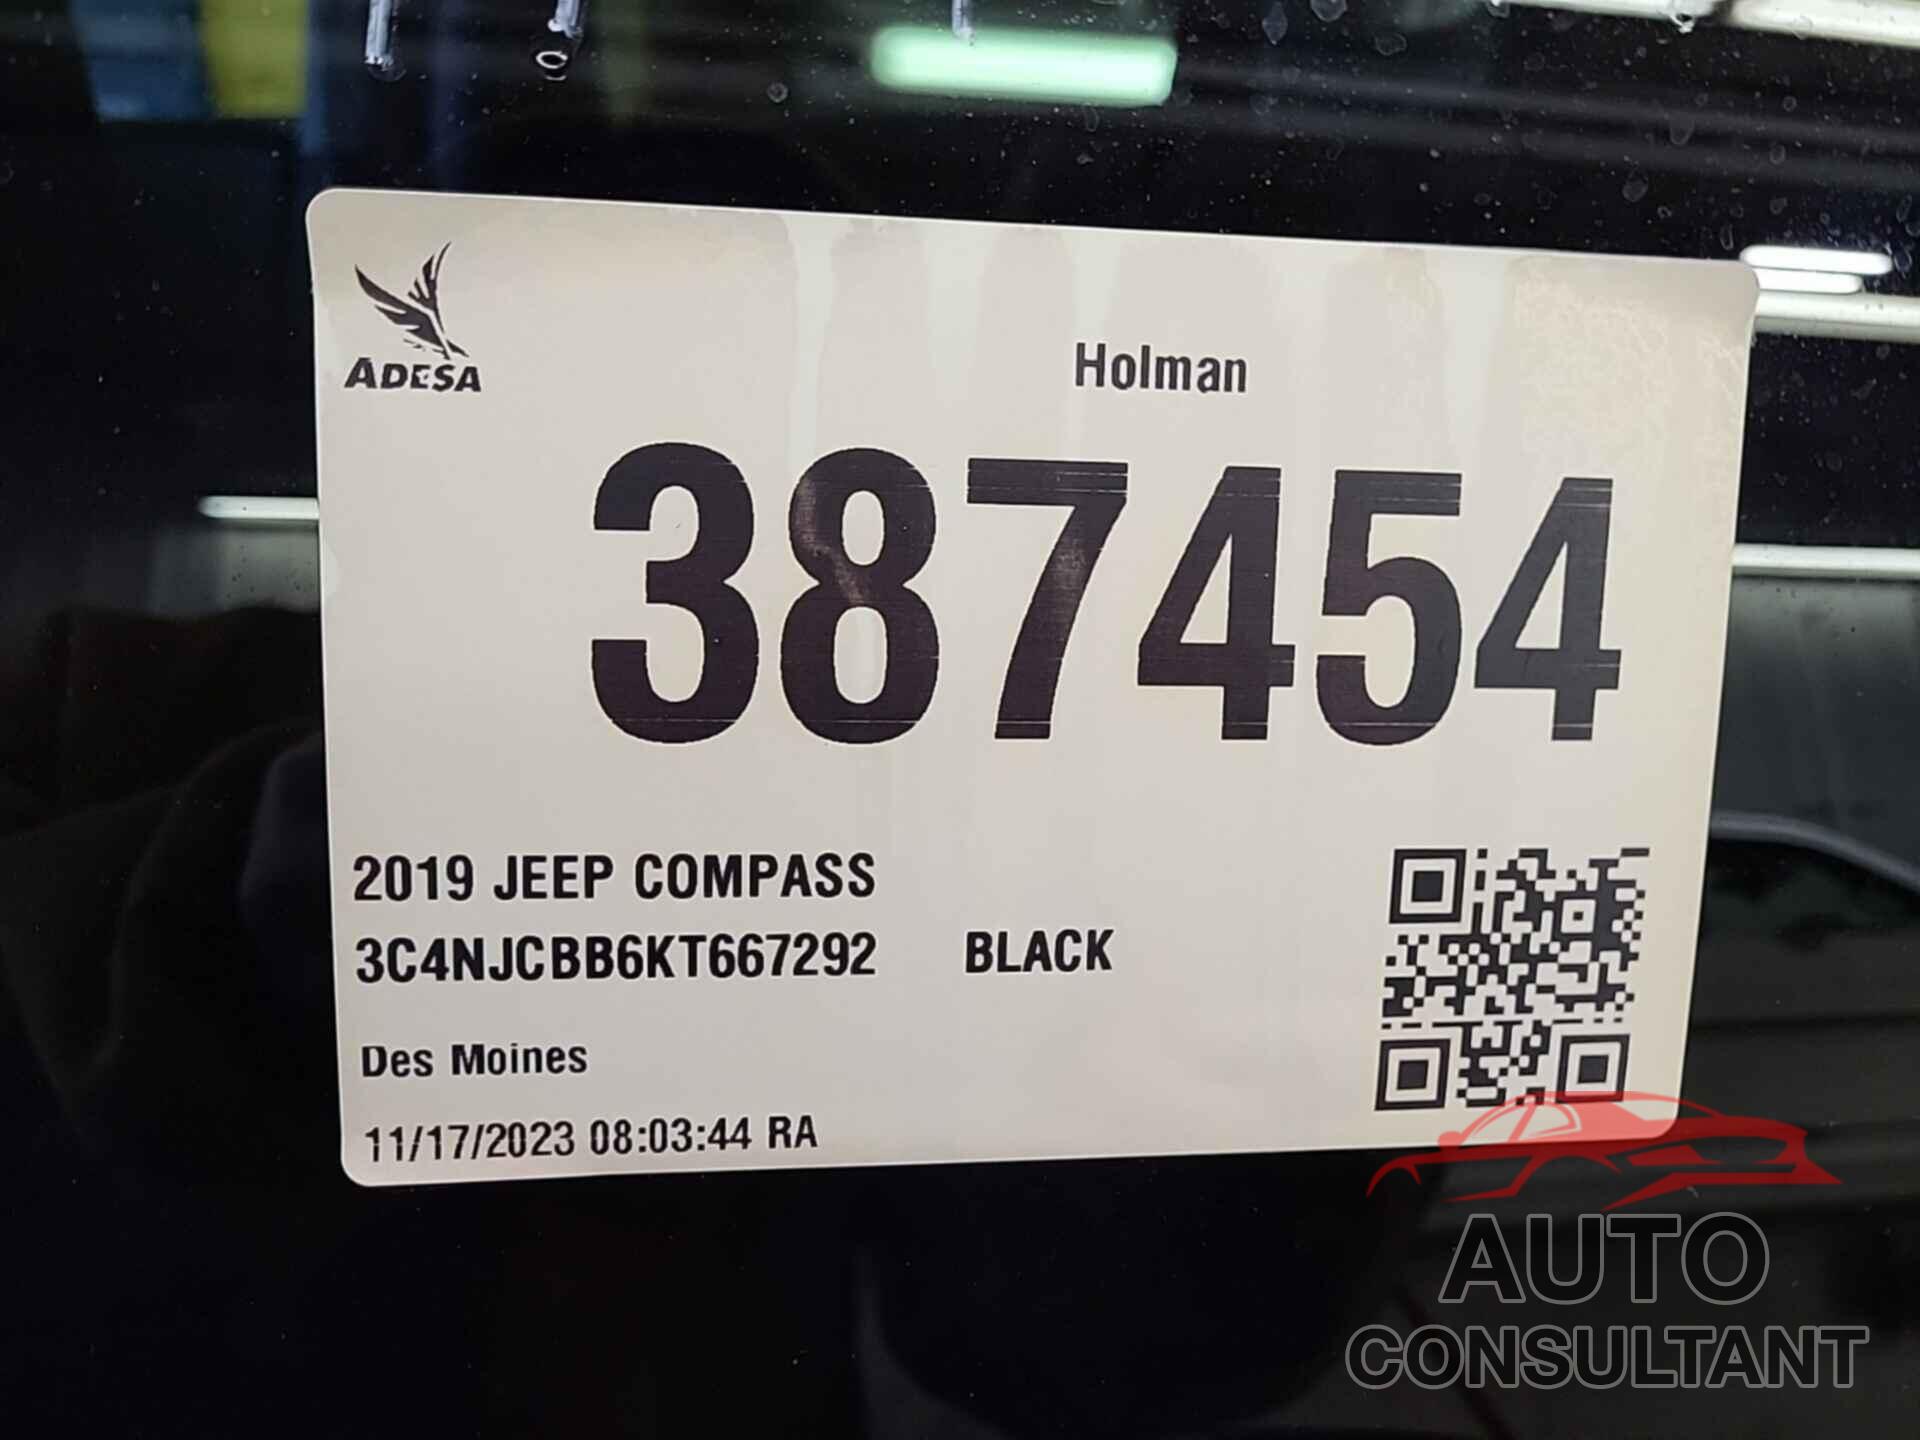 JEEP COMPASS 2019 - 3C4NJCBB6KT667292